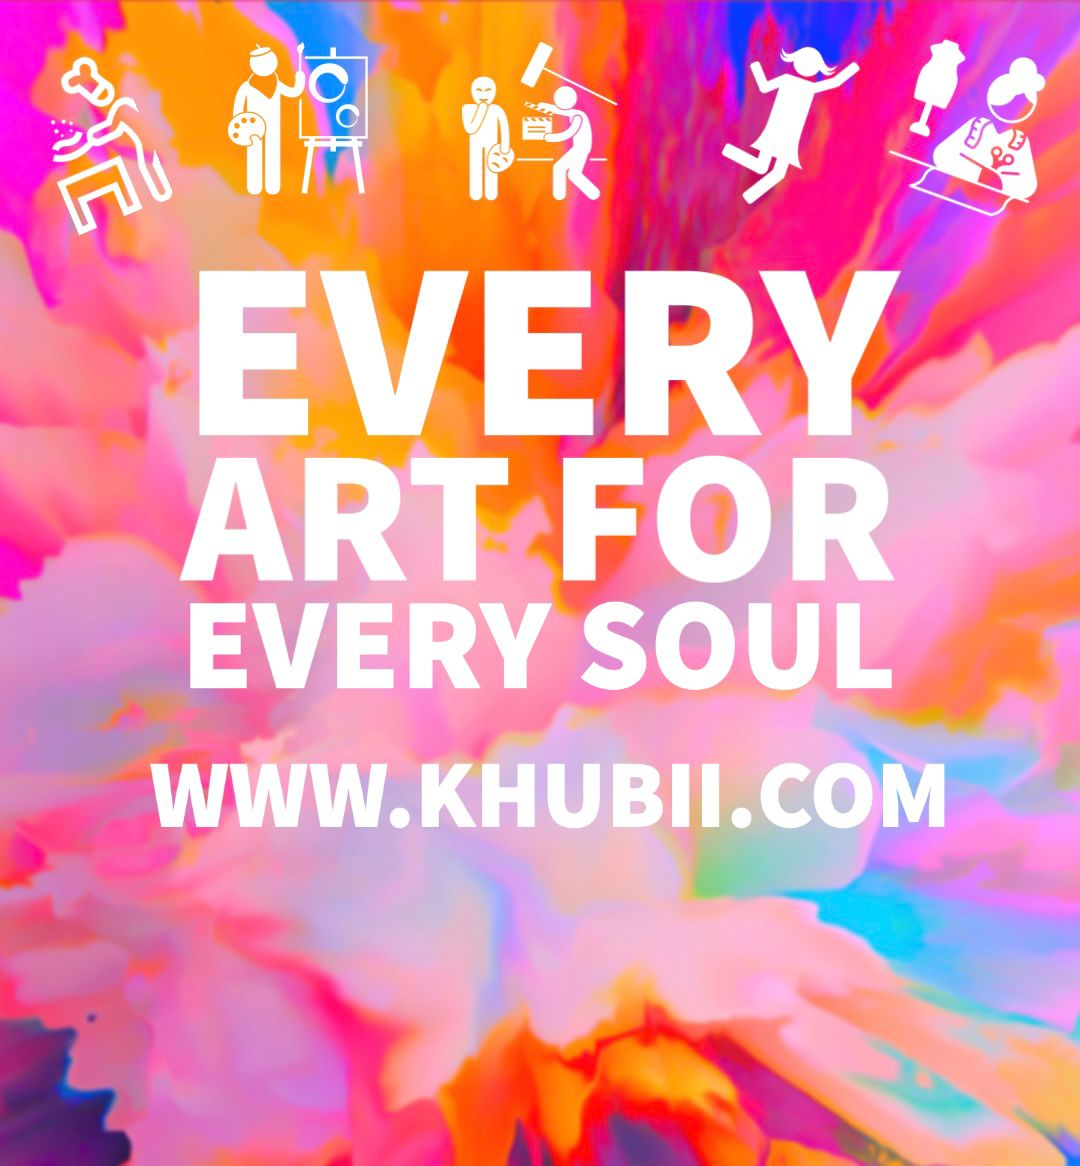 Khubii: The Rising International Talent Portal Helping Extraordinary Artists Attract Global Opportunities